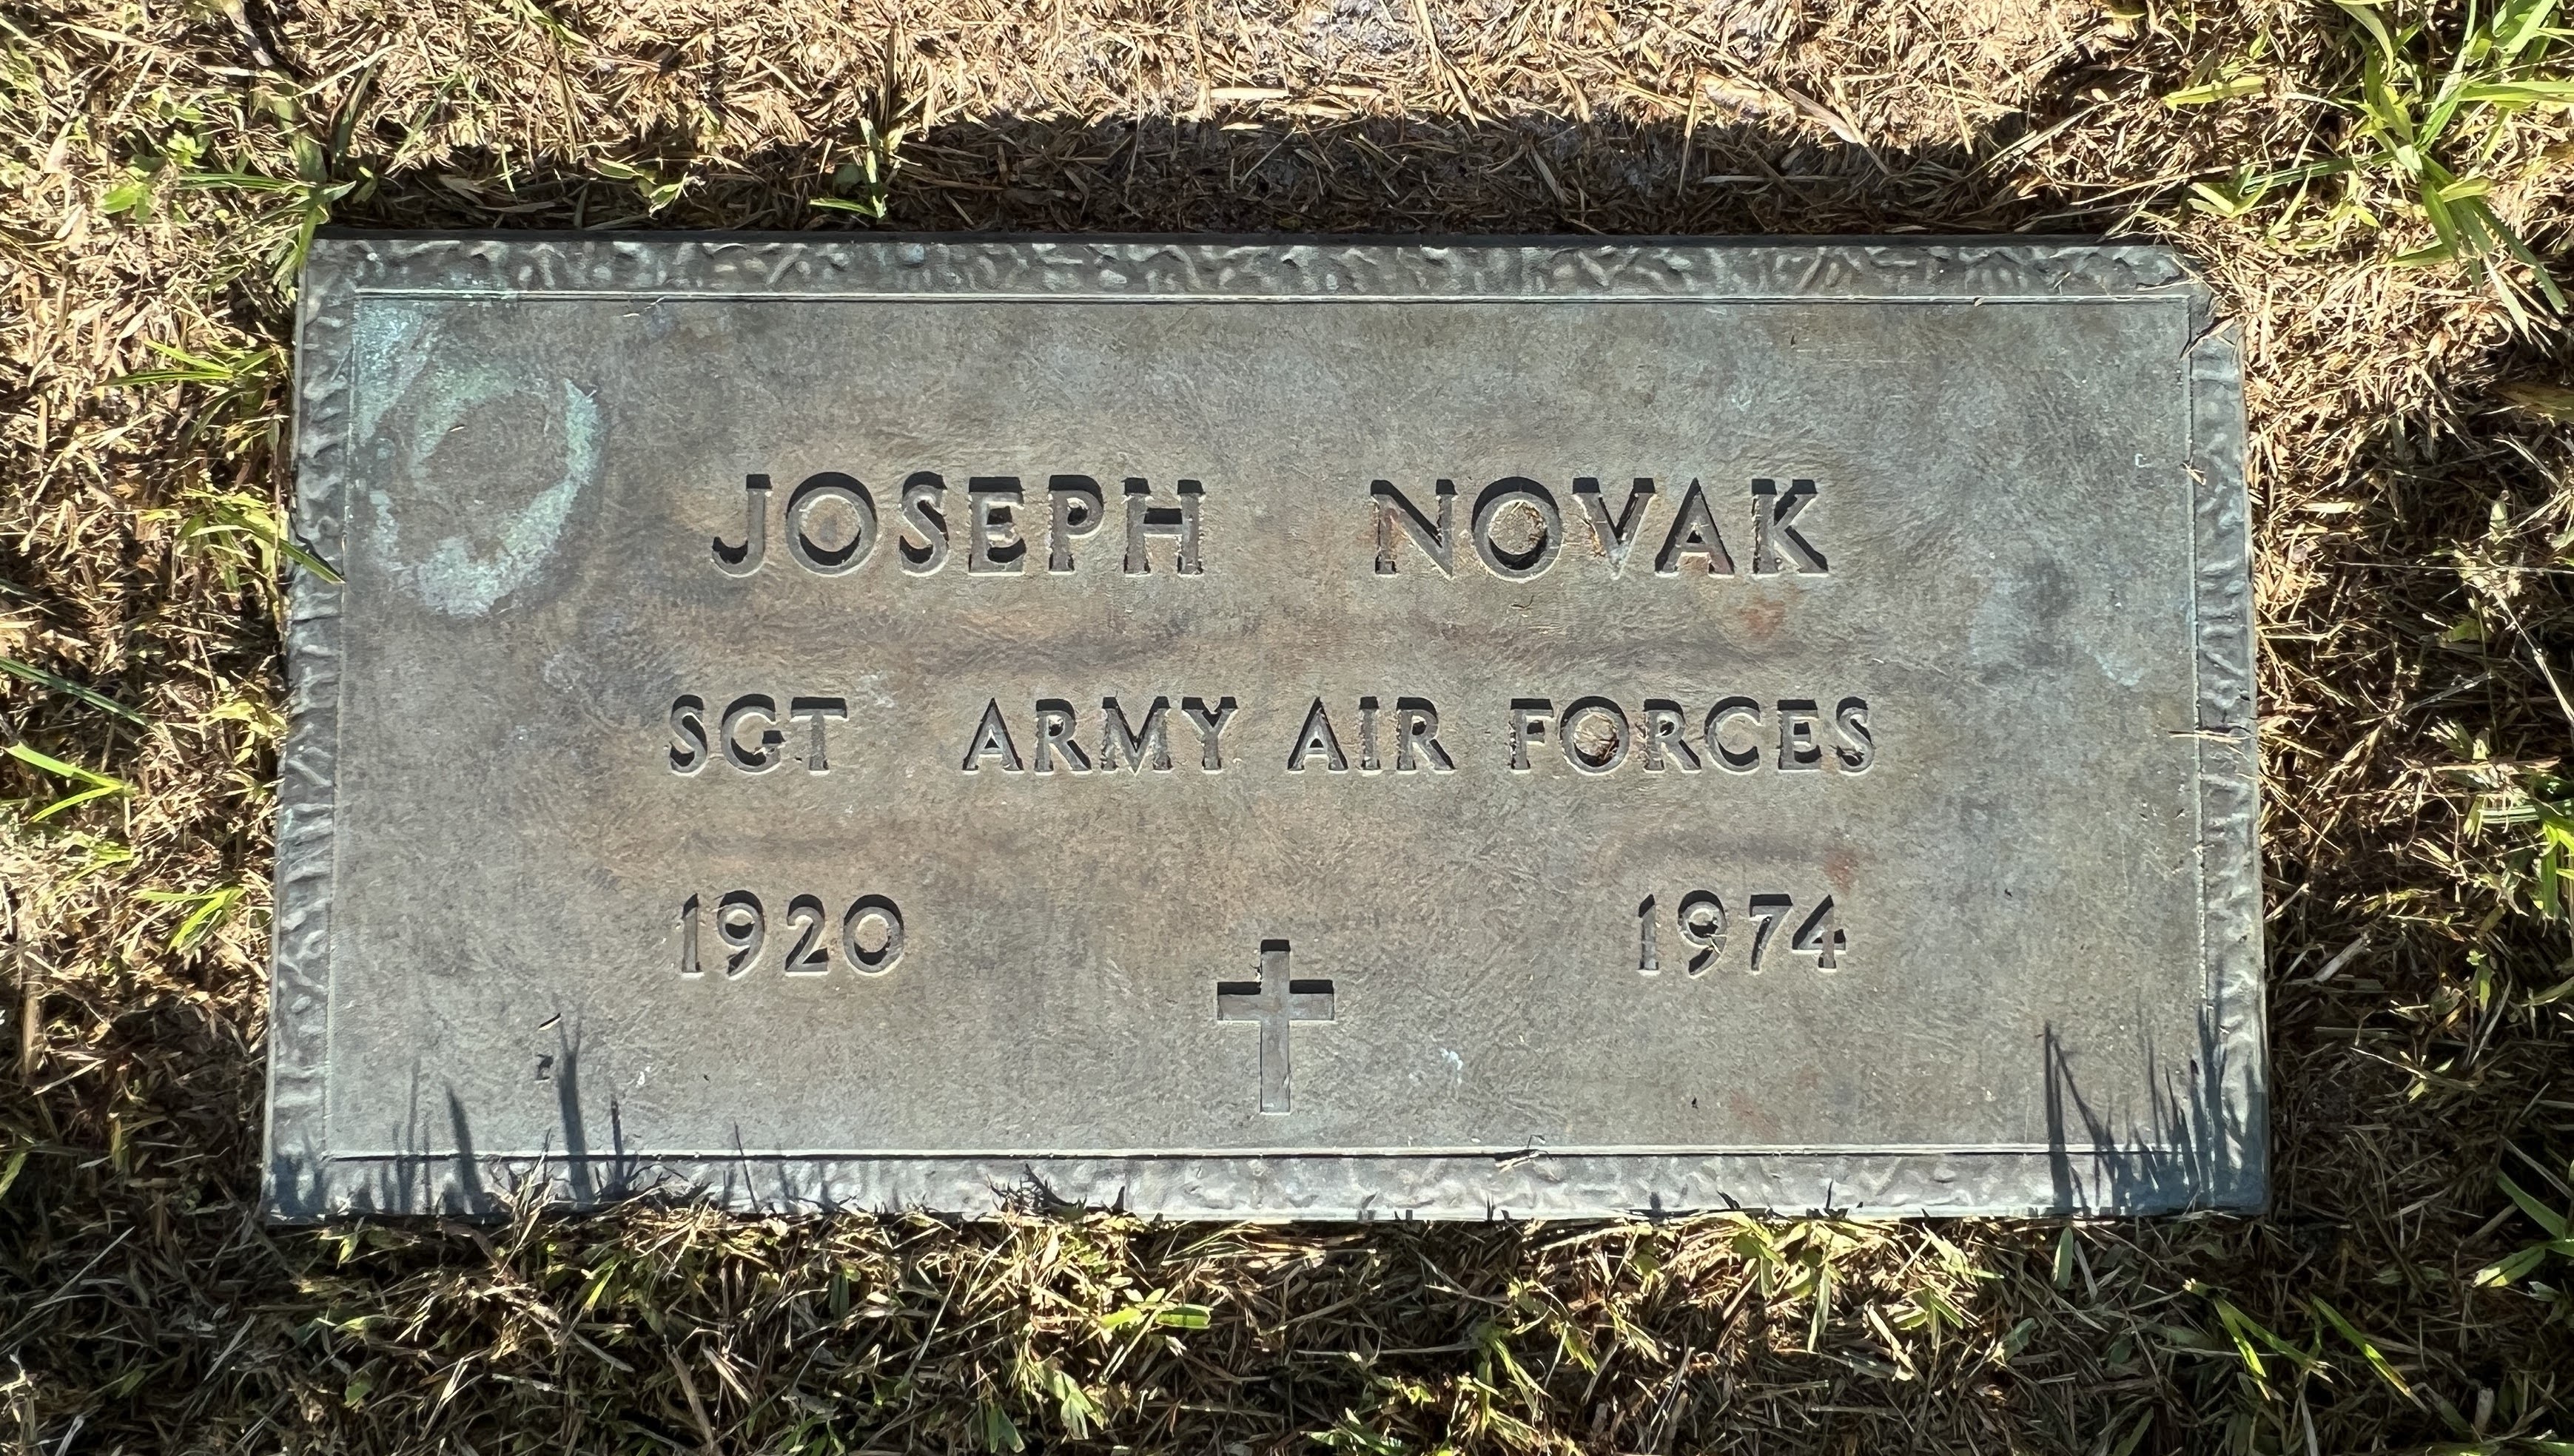 Sgt Joseph Novak